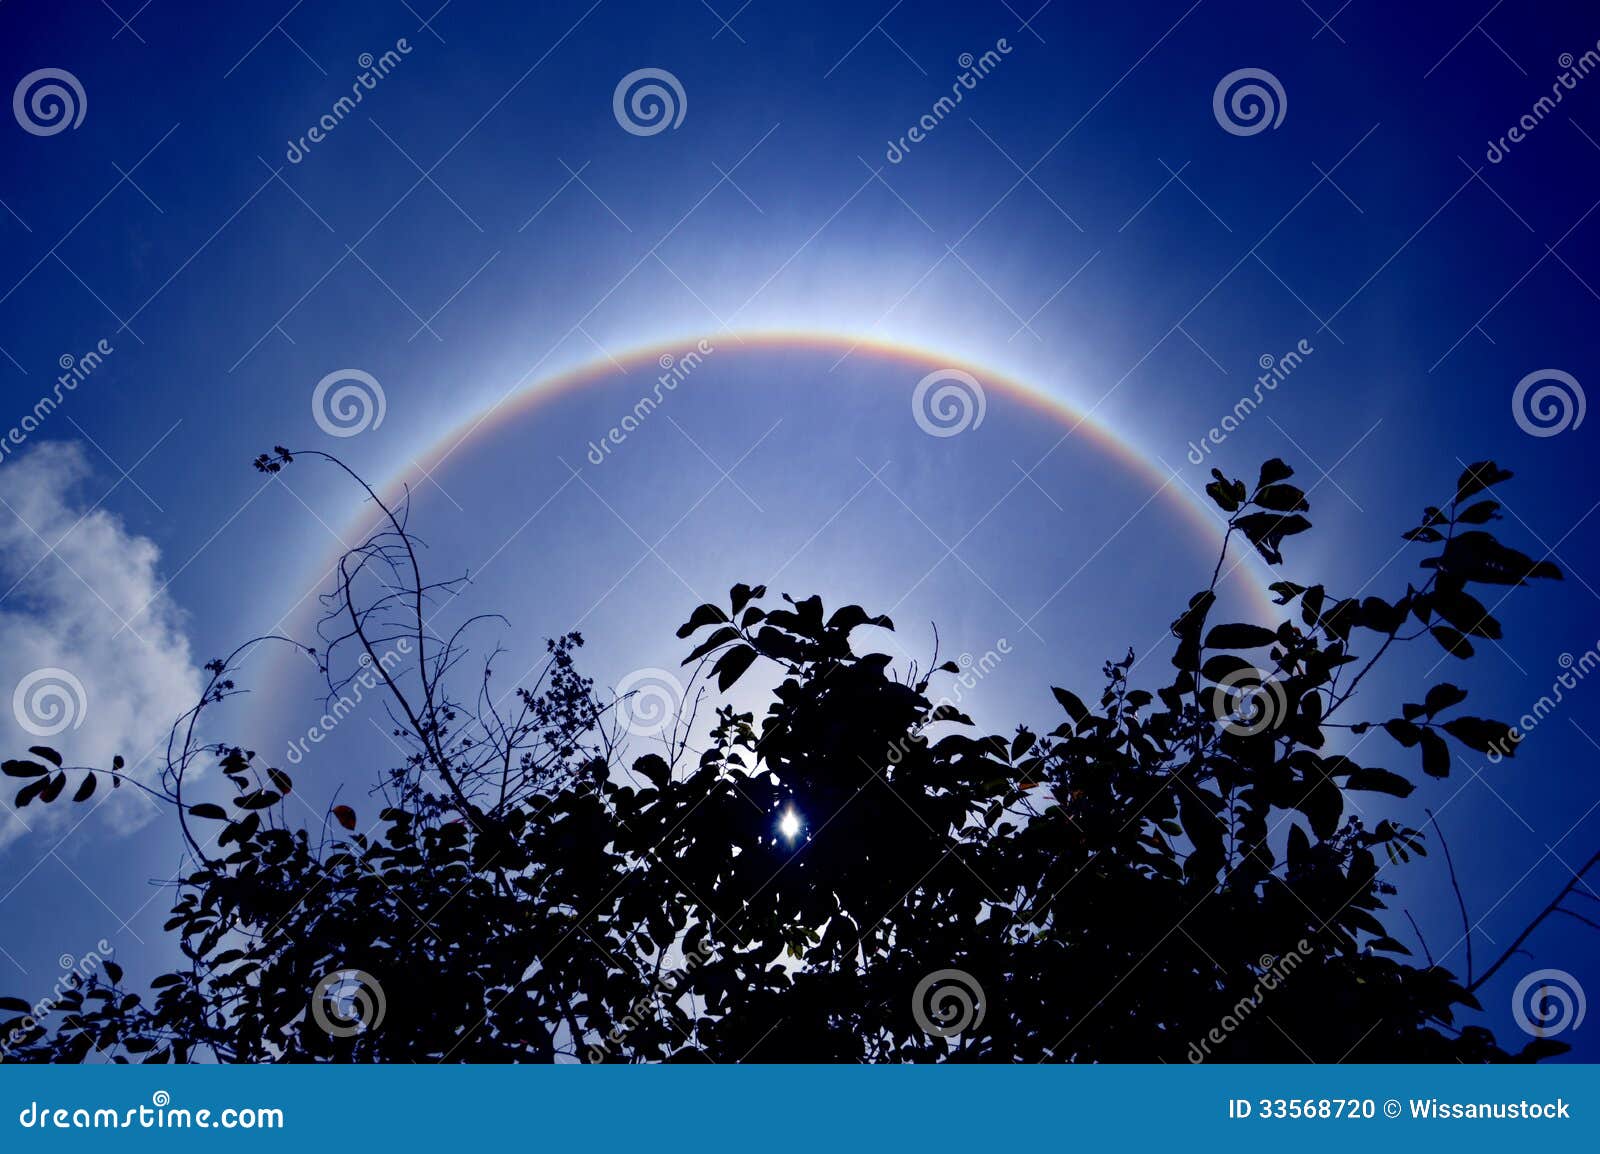 Solar Corona, Ring Around The Sun Background Stock Photo ...